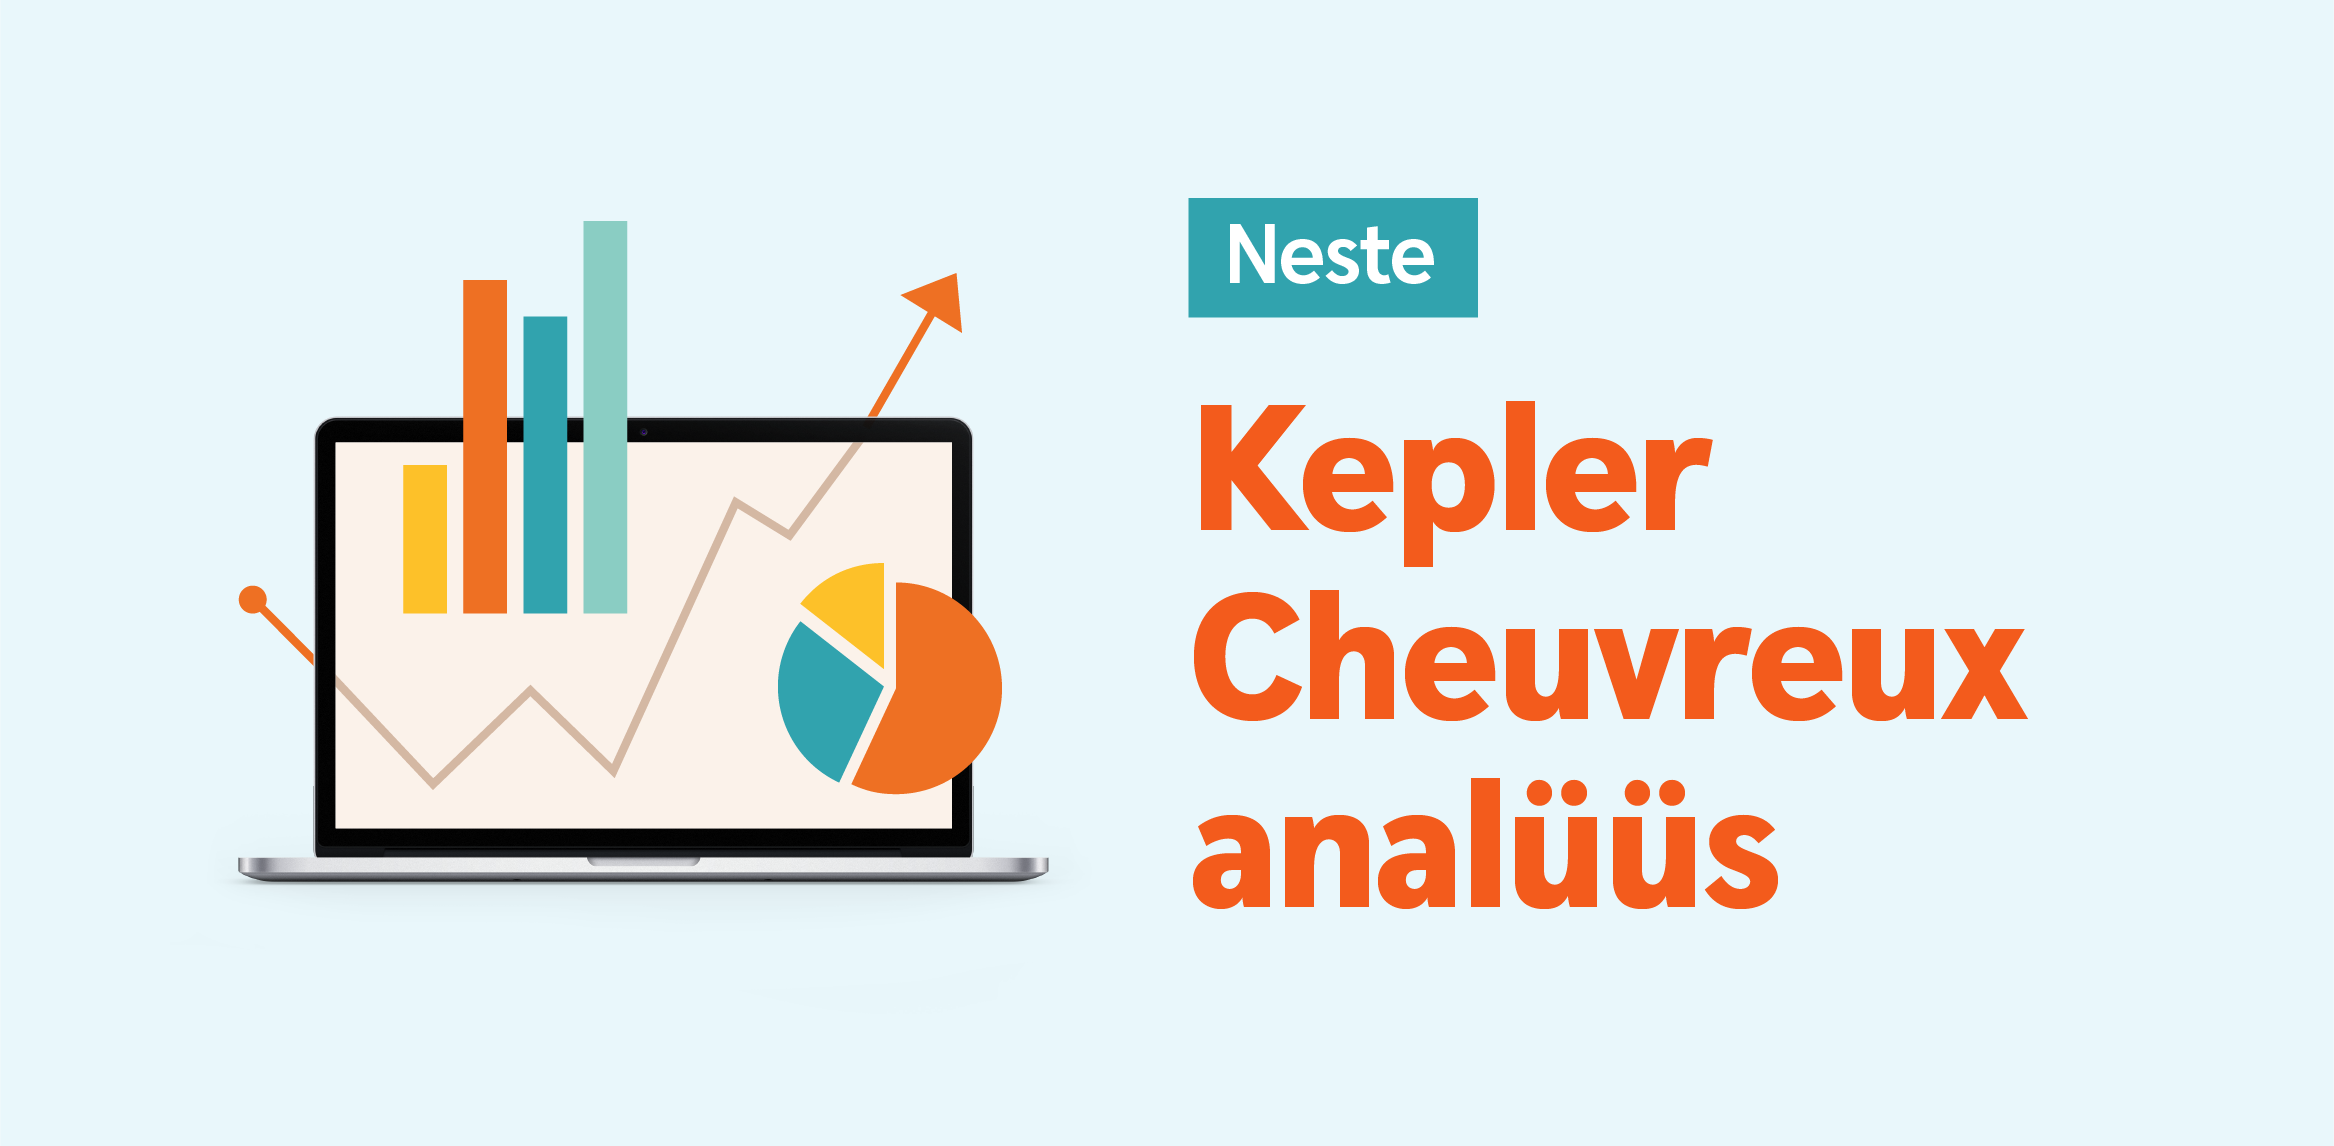 Kepler Cheuvreux tõstis Neste aktsia hinnasihti